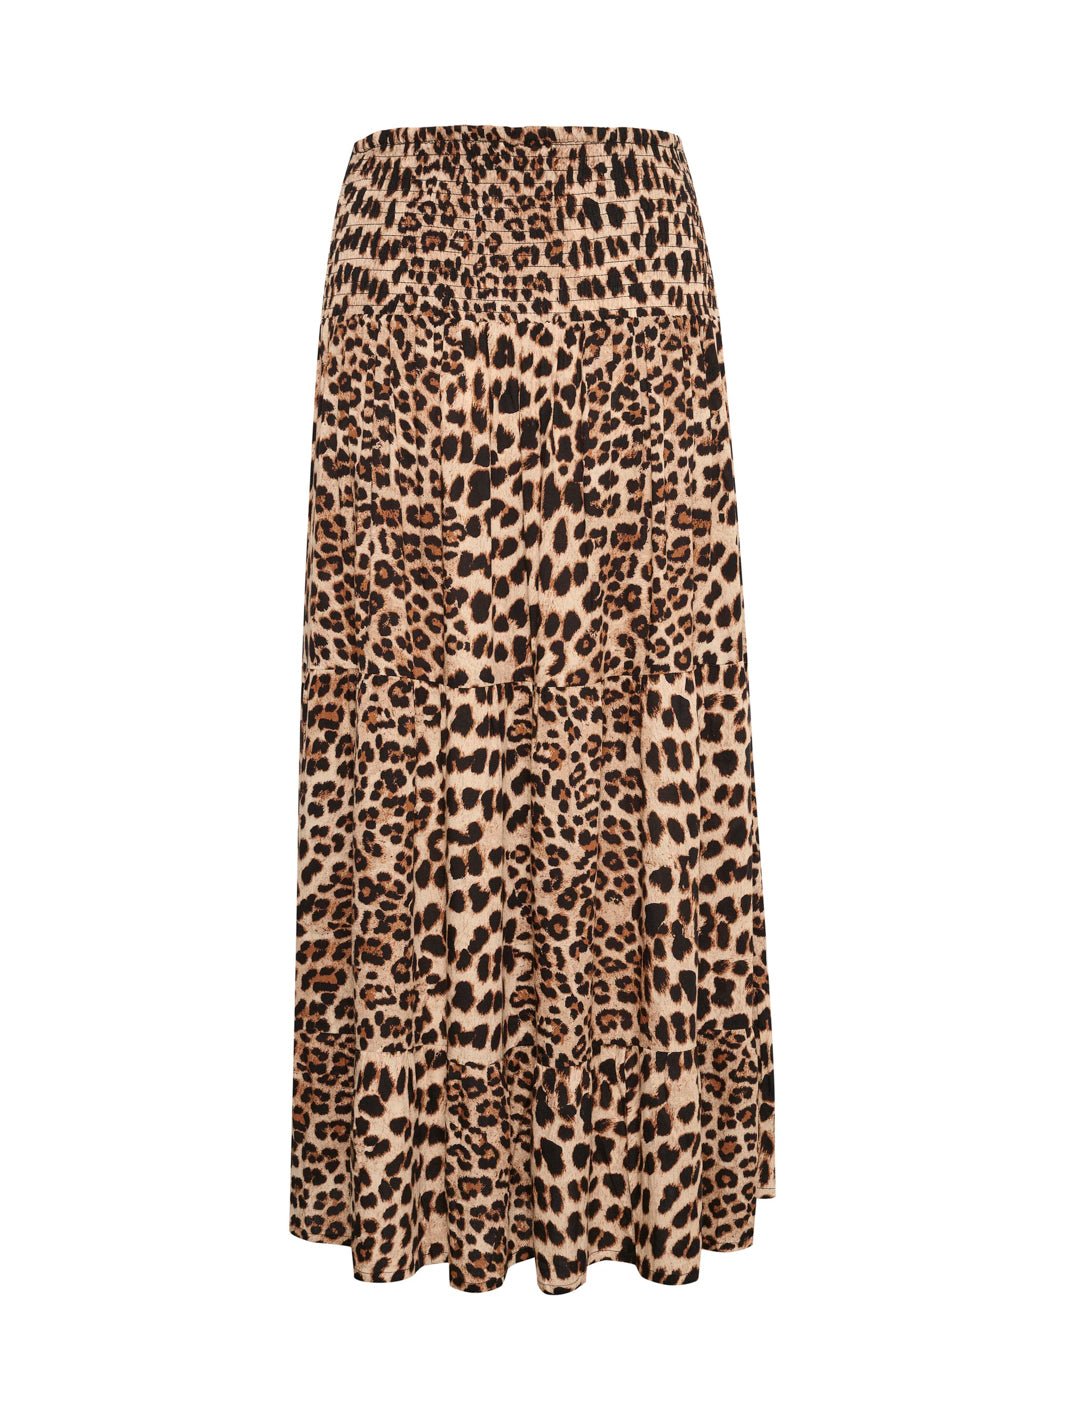 Kaffe KAmaxi smock skirt classic leopard - Online-Mode